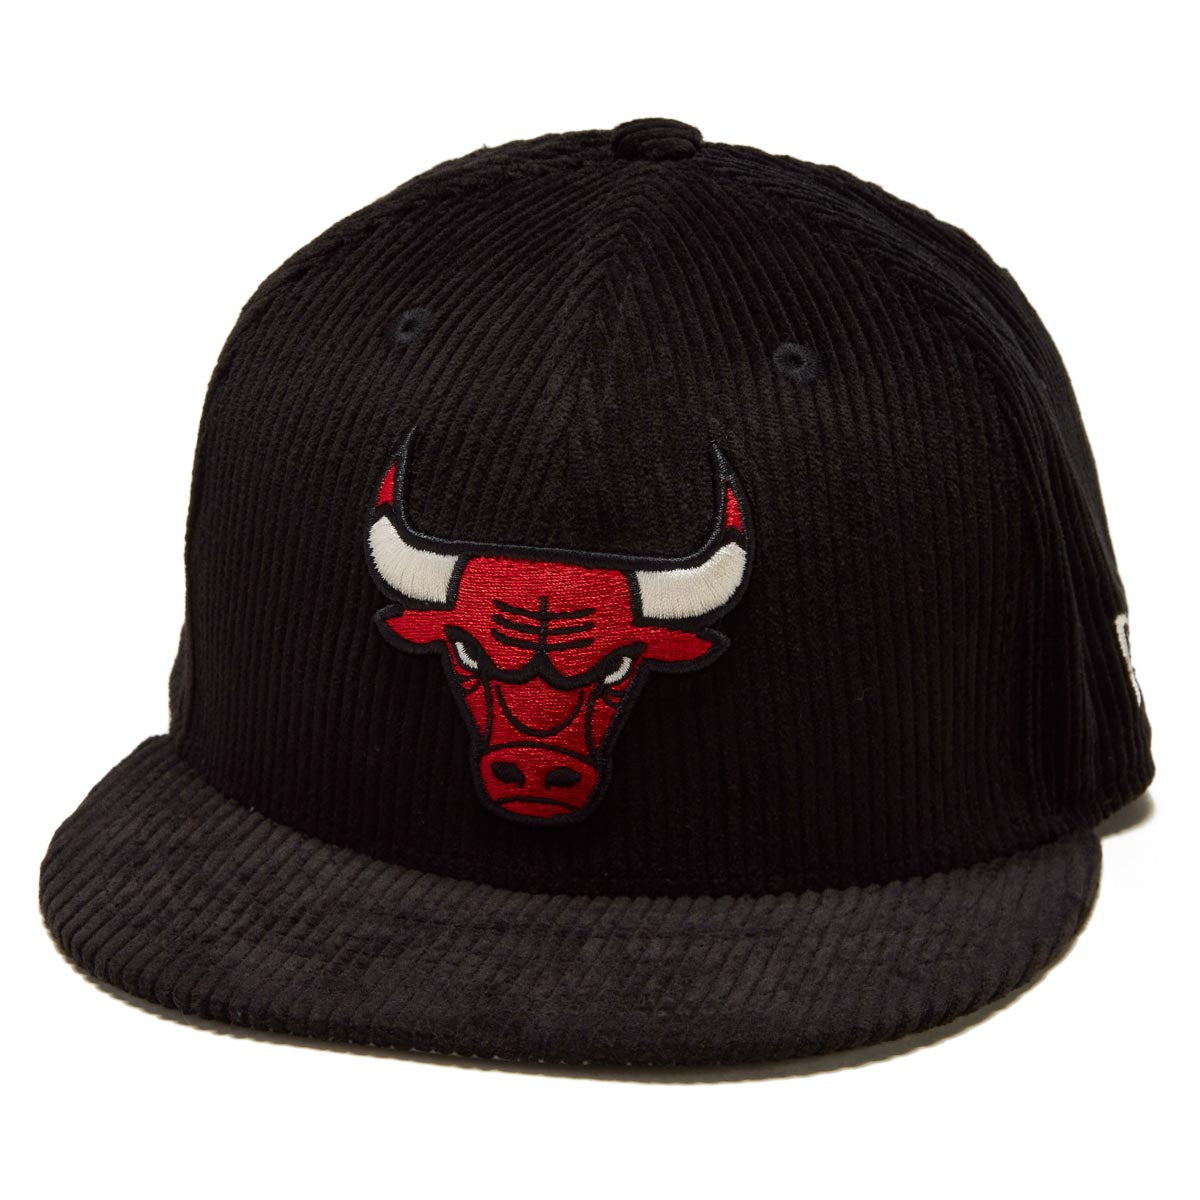 New Era 5950 Letterman Pin Hat - Chicago Bulls image 1